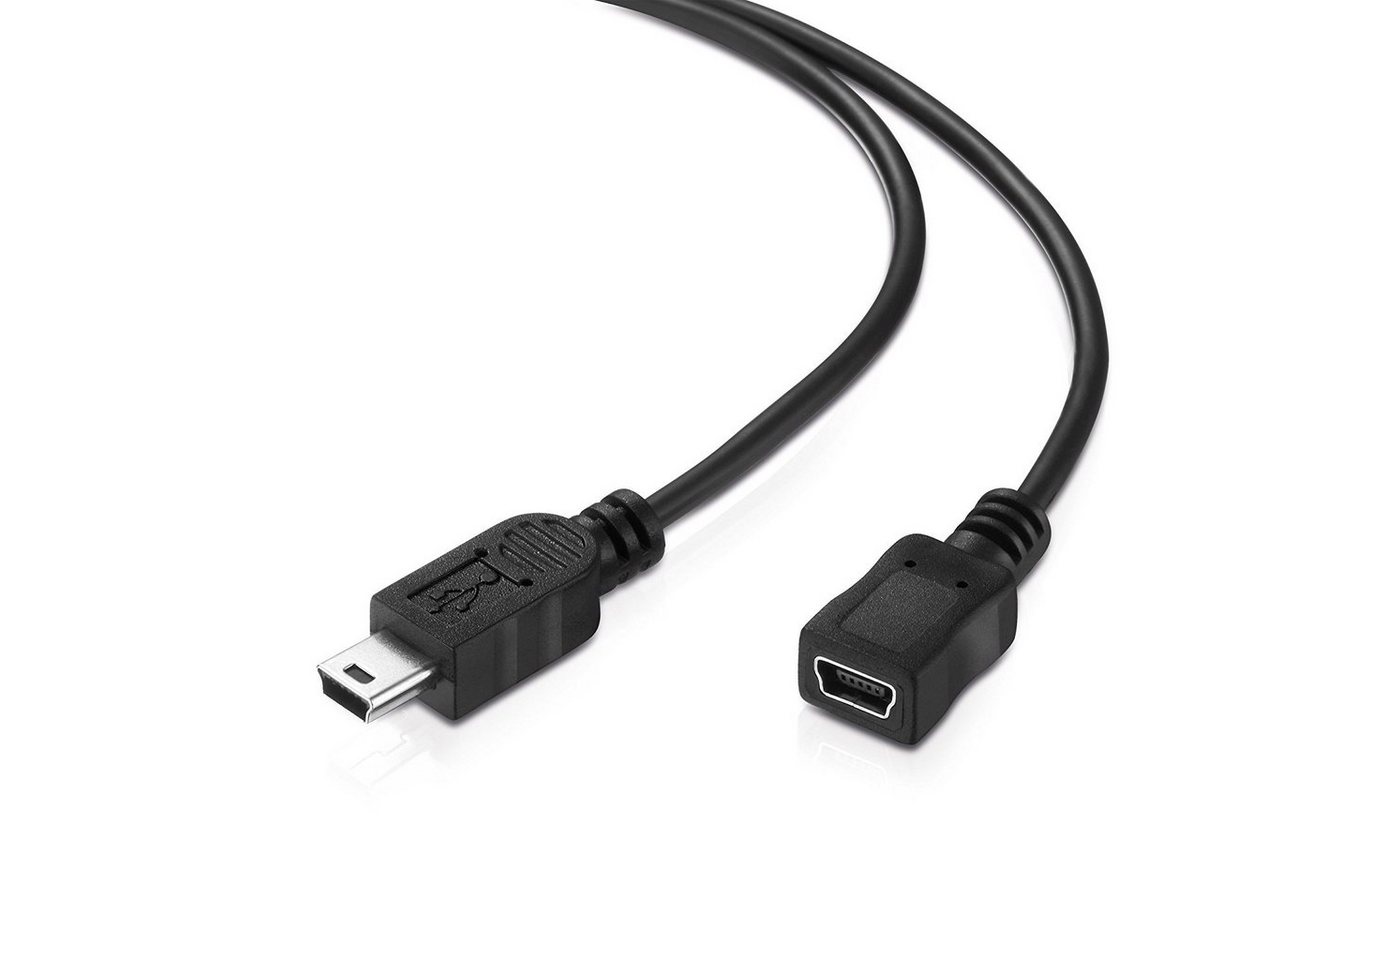 adaptare adaptare 40124 1,2 m Mini-USB 2.0 Verlängerung USB-Kabel von adaptare